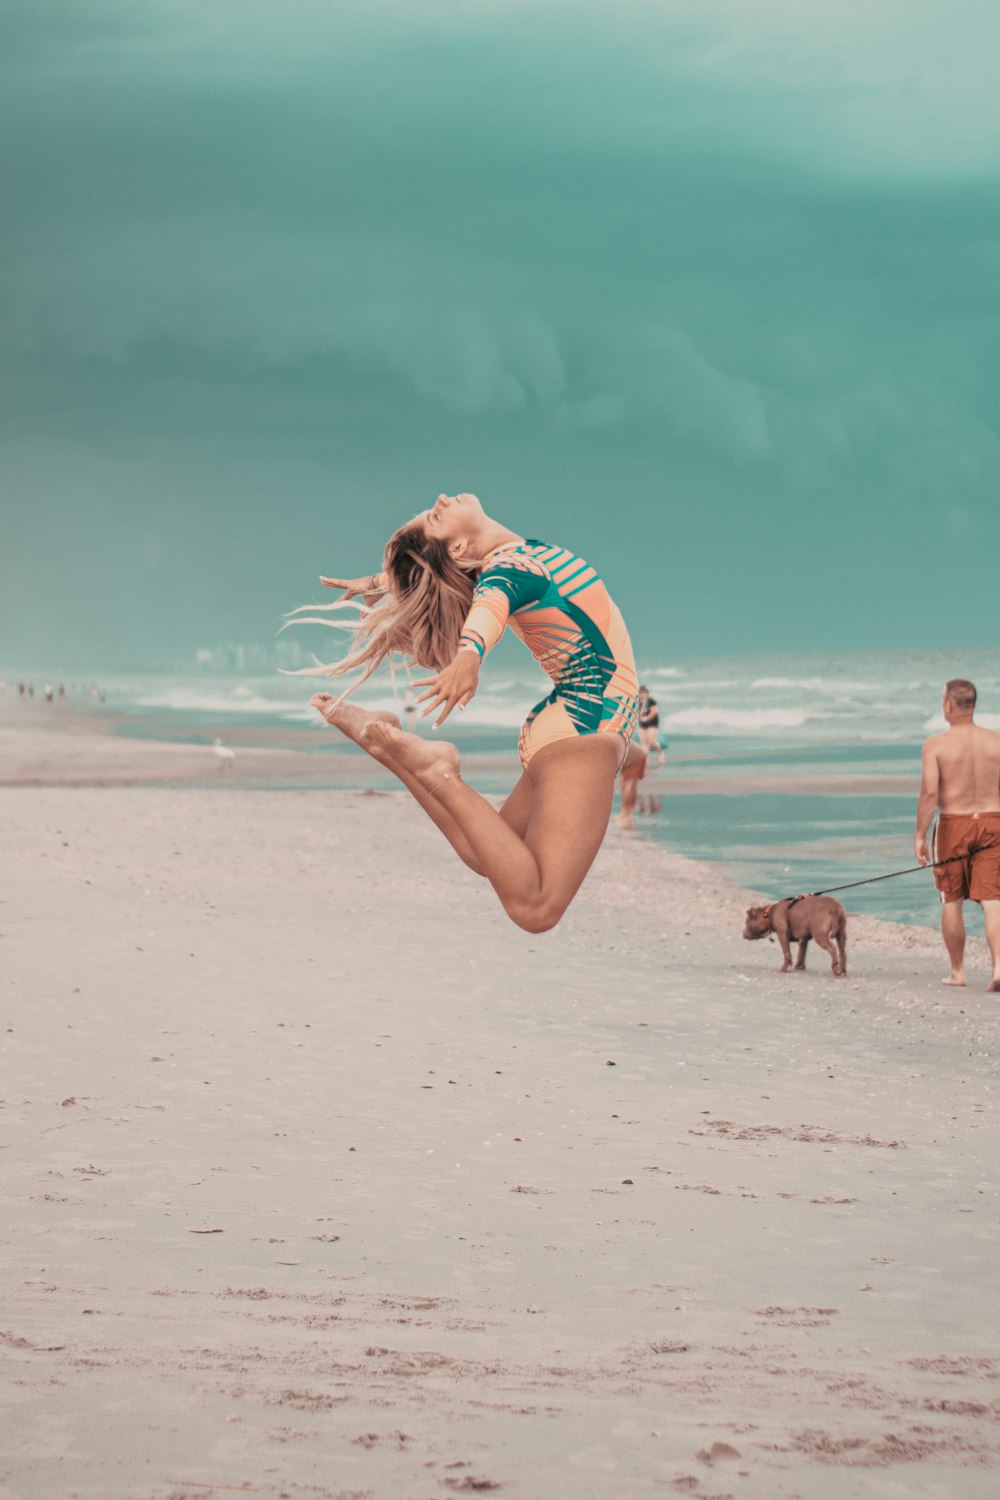 a woman jumping on a beach